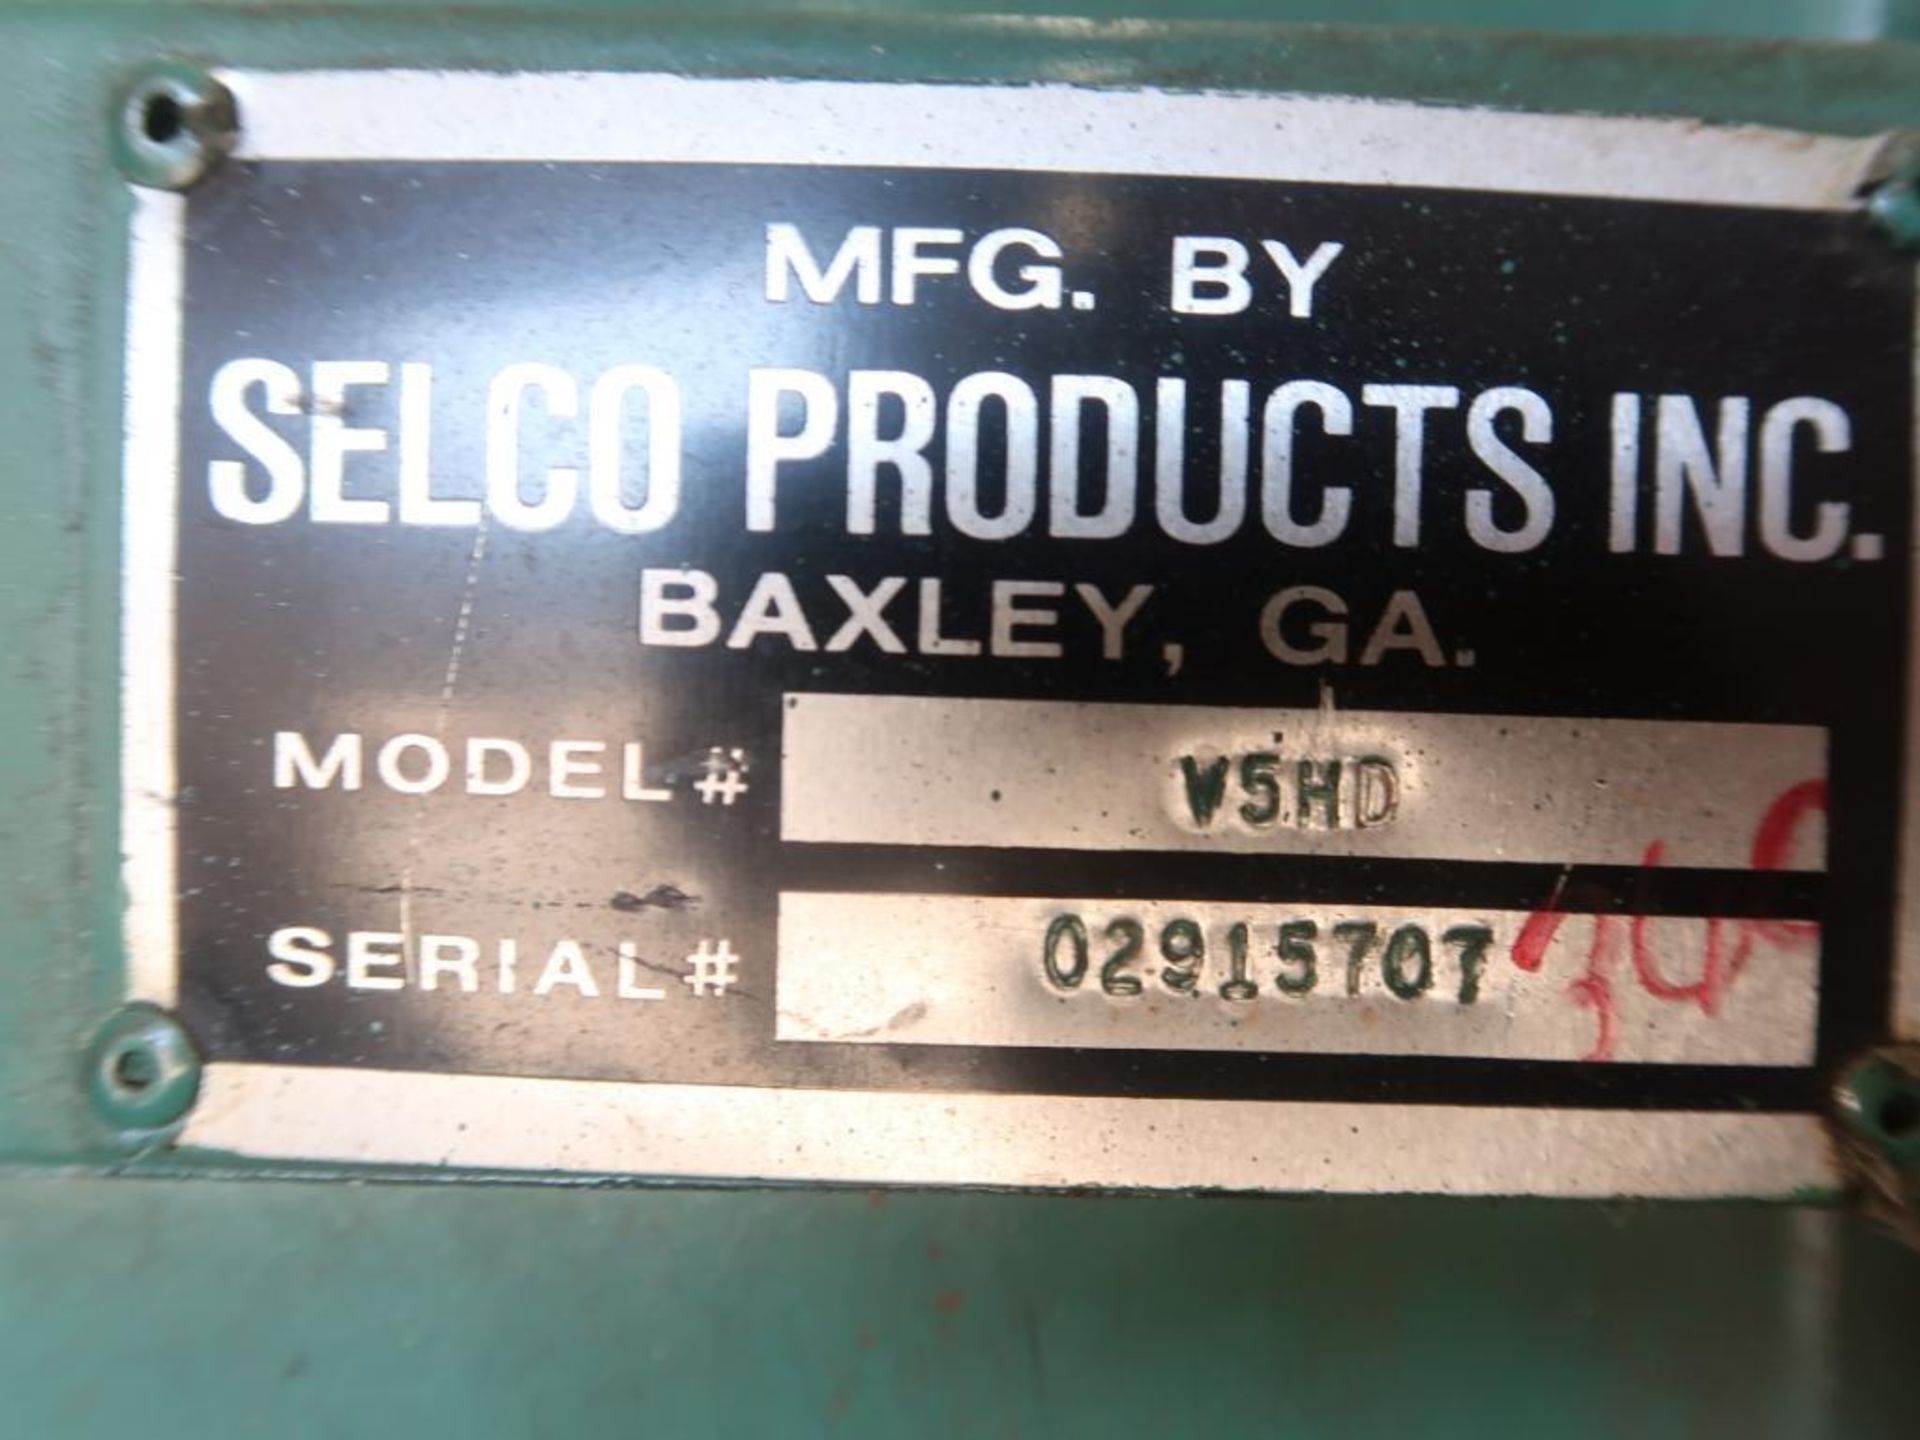 SELCO 30 in. x 60 in. Hydraulic Baler Model V5HD, S/N 02915707 - Image 2 of 2